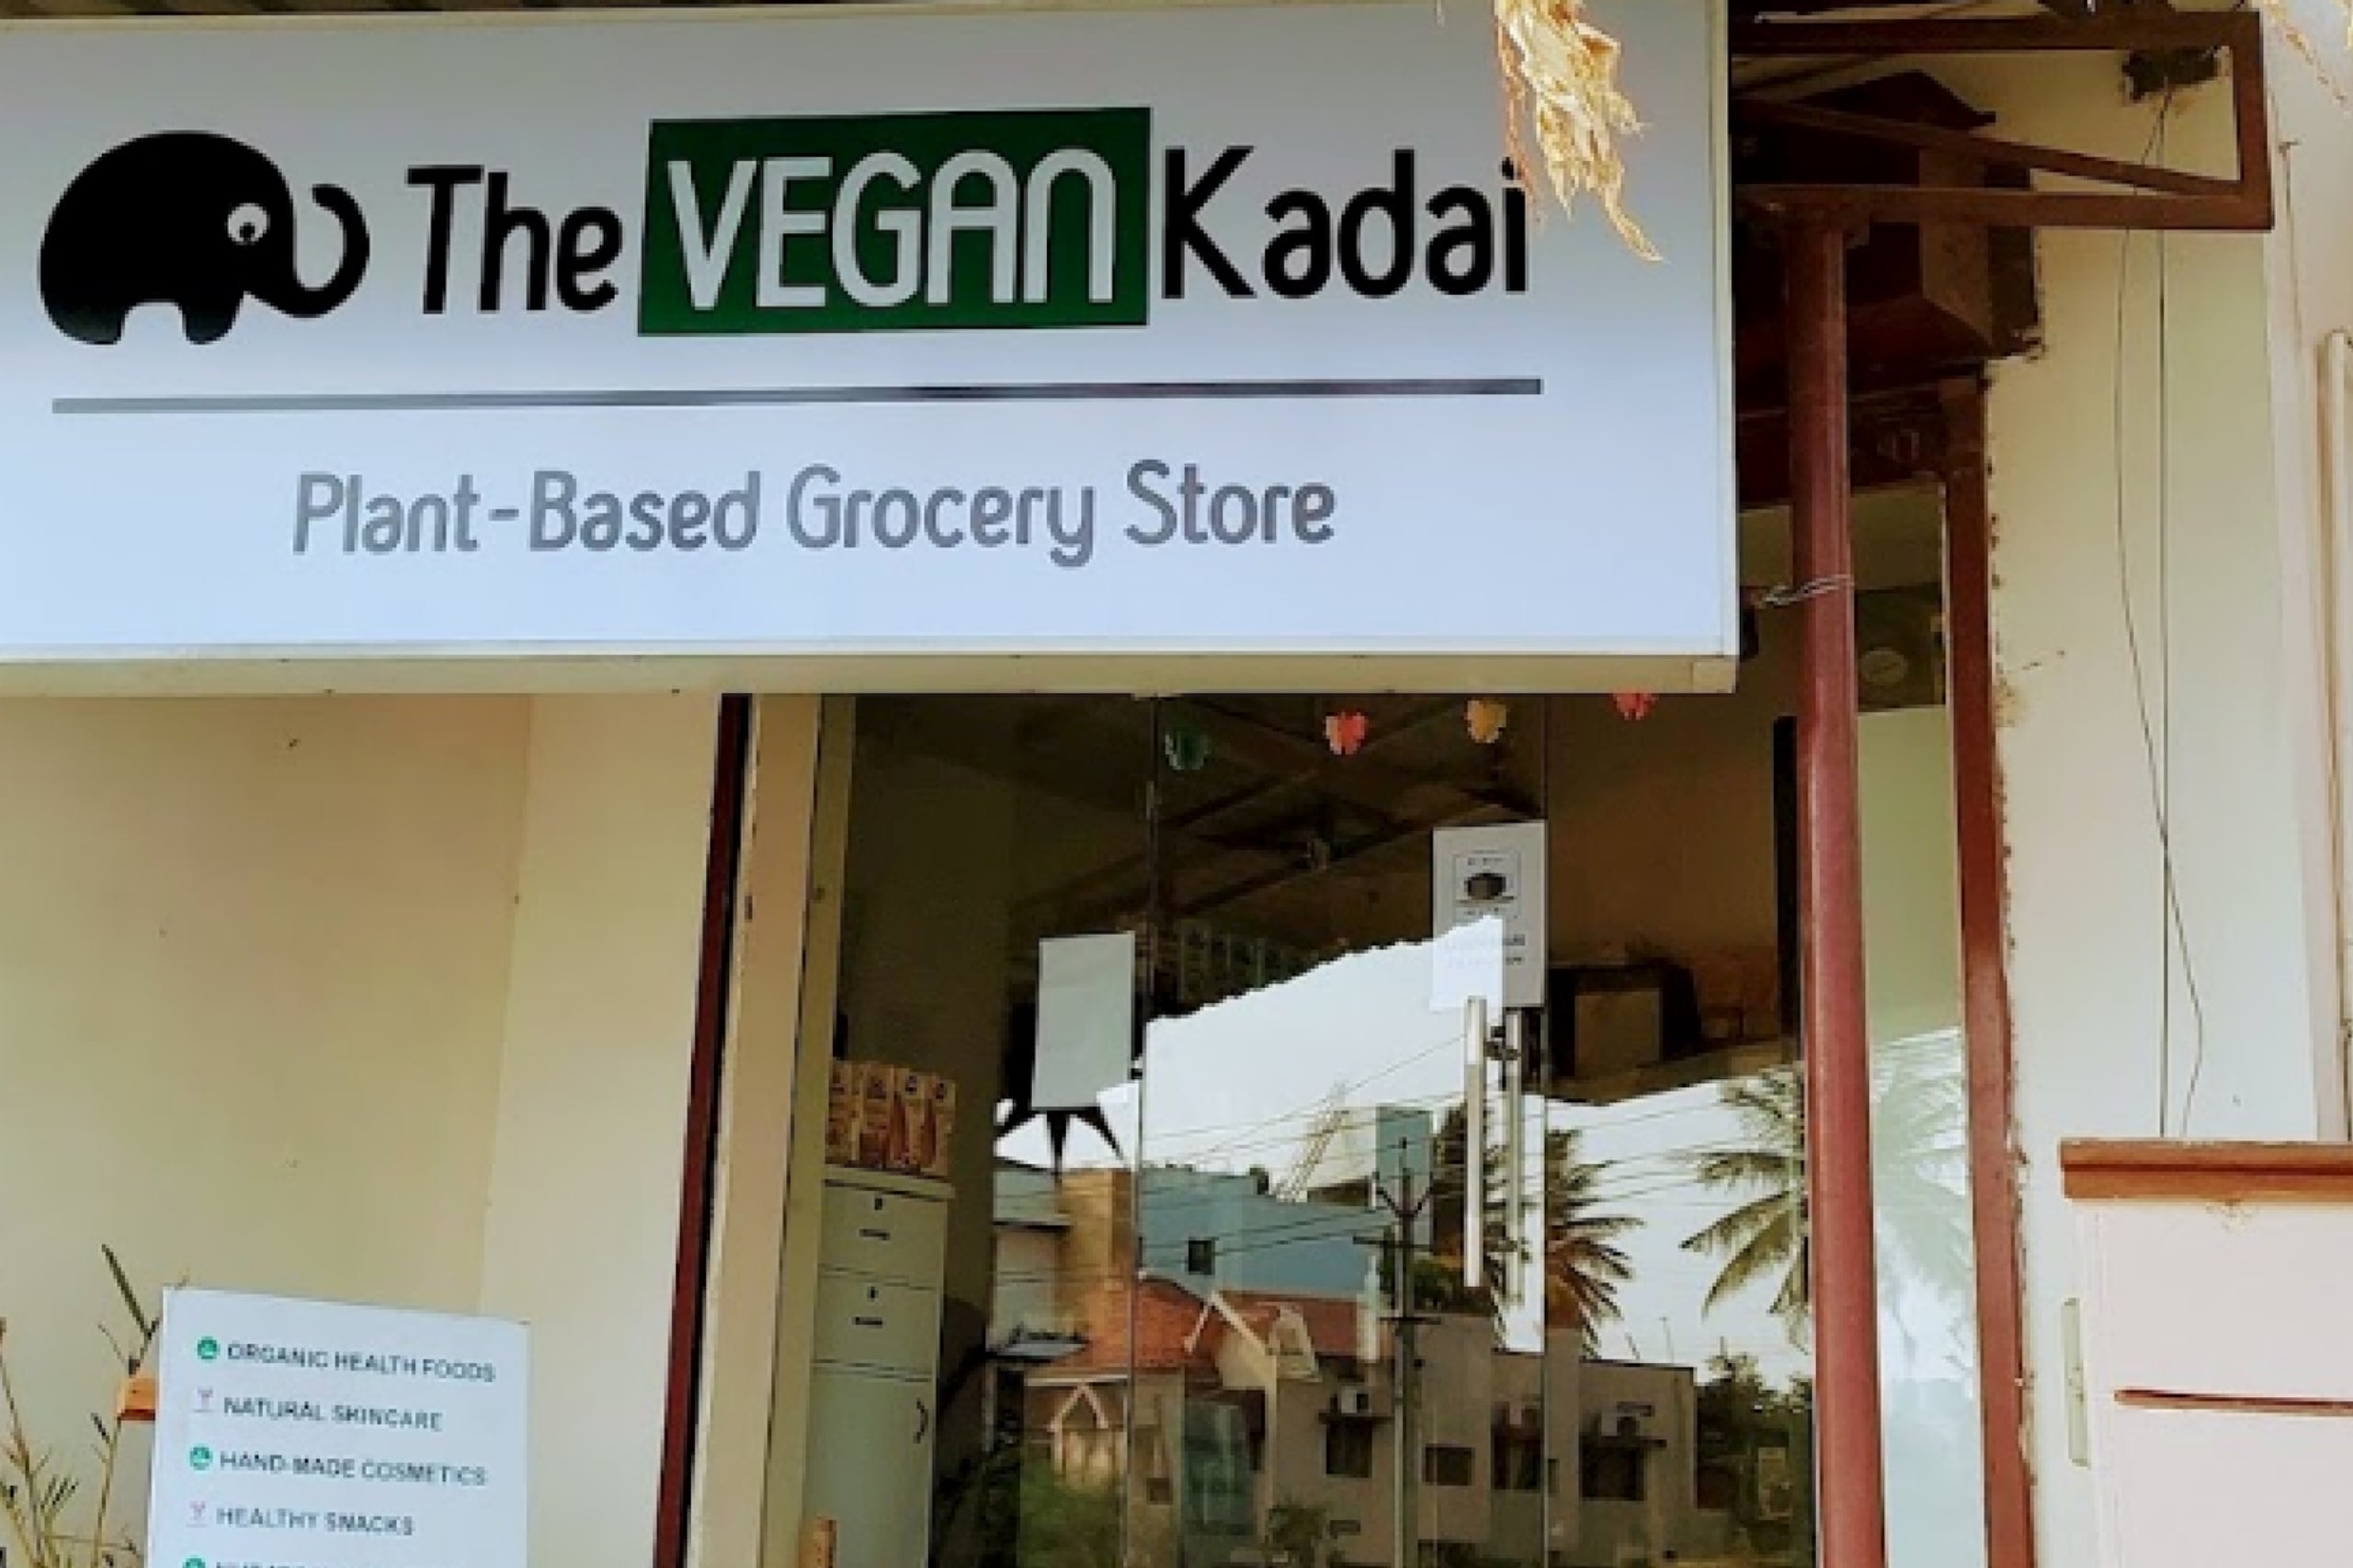 The Vegan Kadai (Vegan Store)